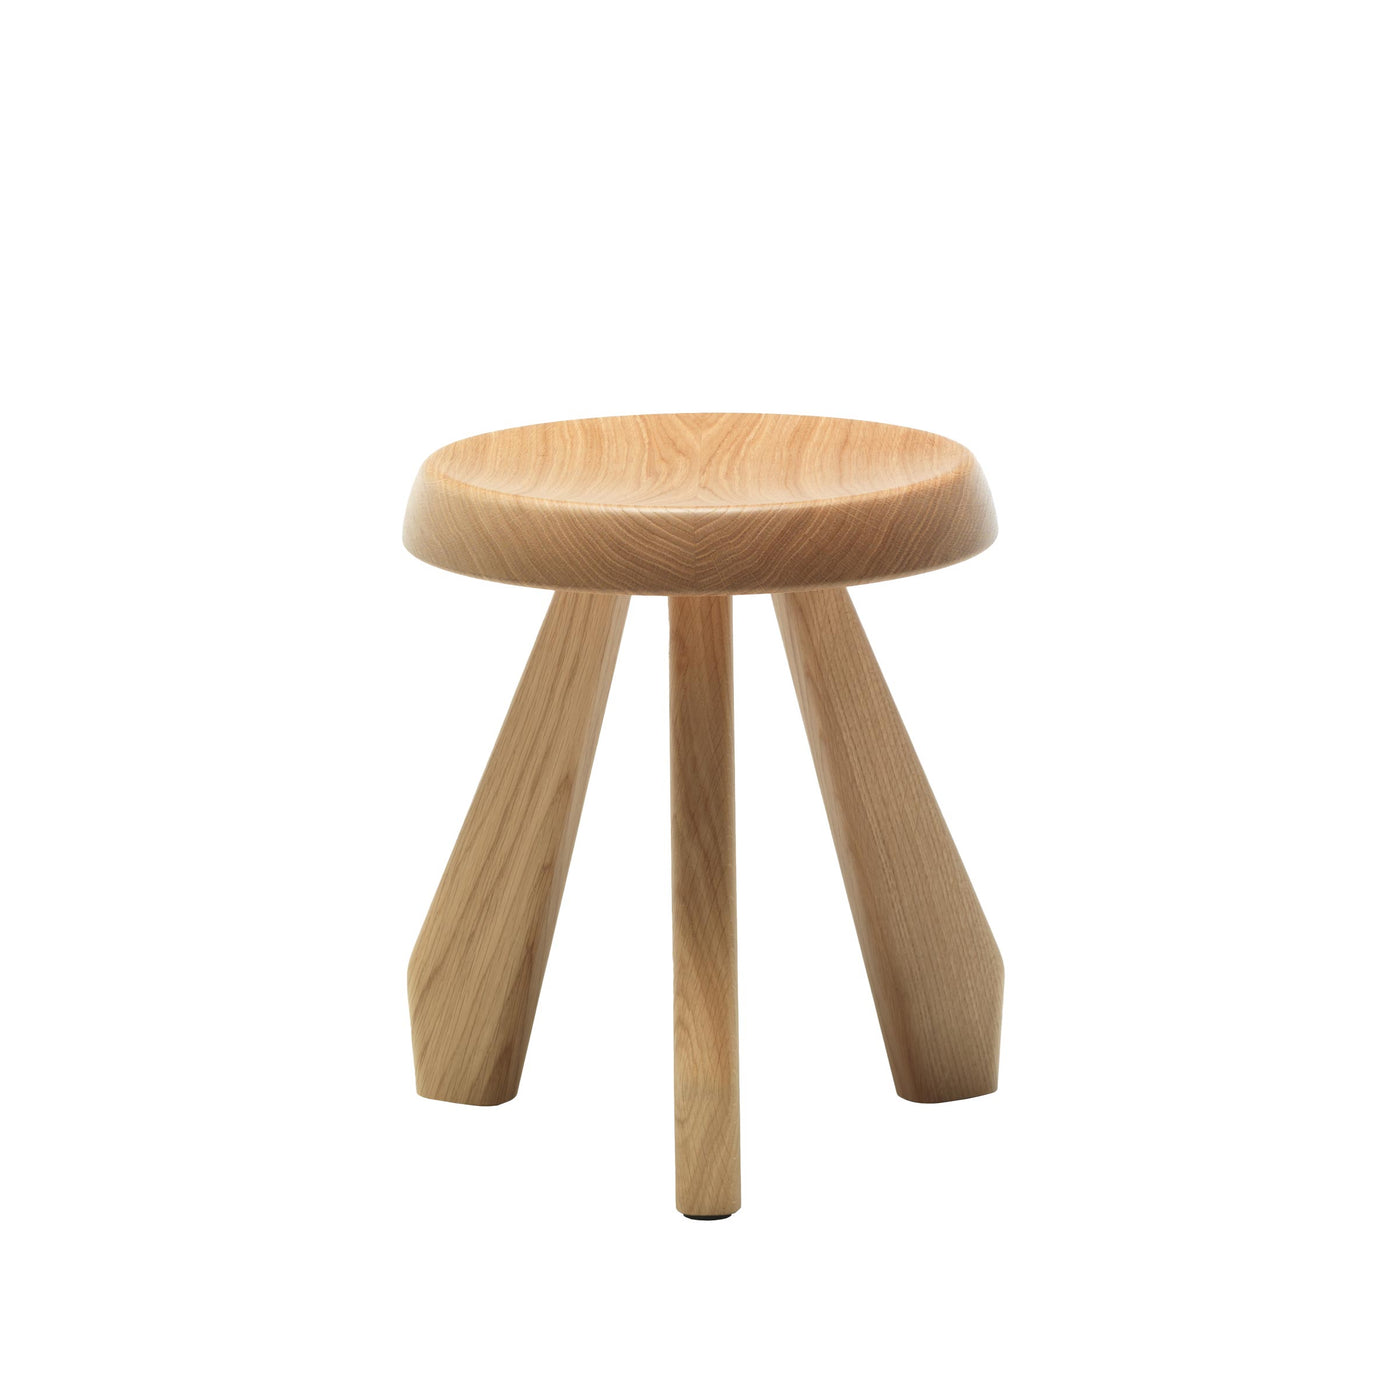 Wood Stool TABOURET MERIBEL, designed by Charlotte Perriand for Cassina 01